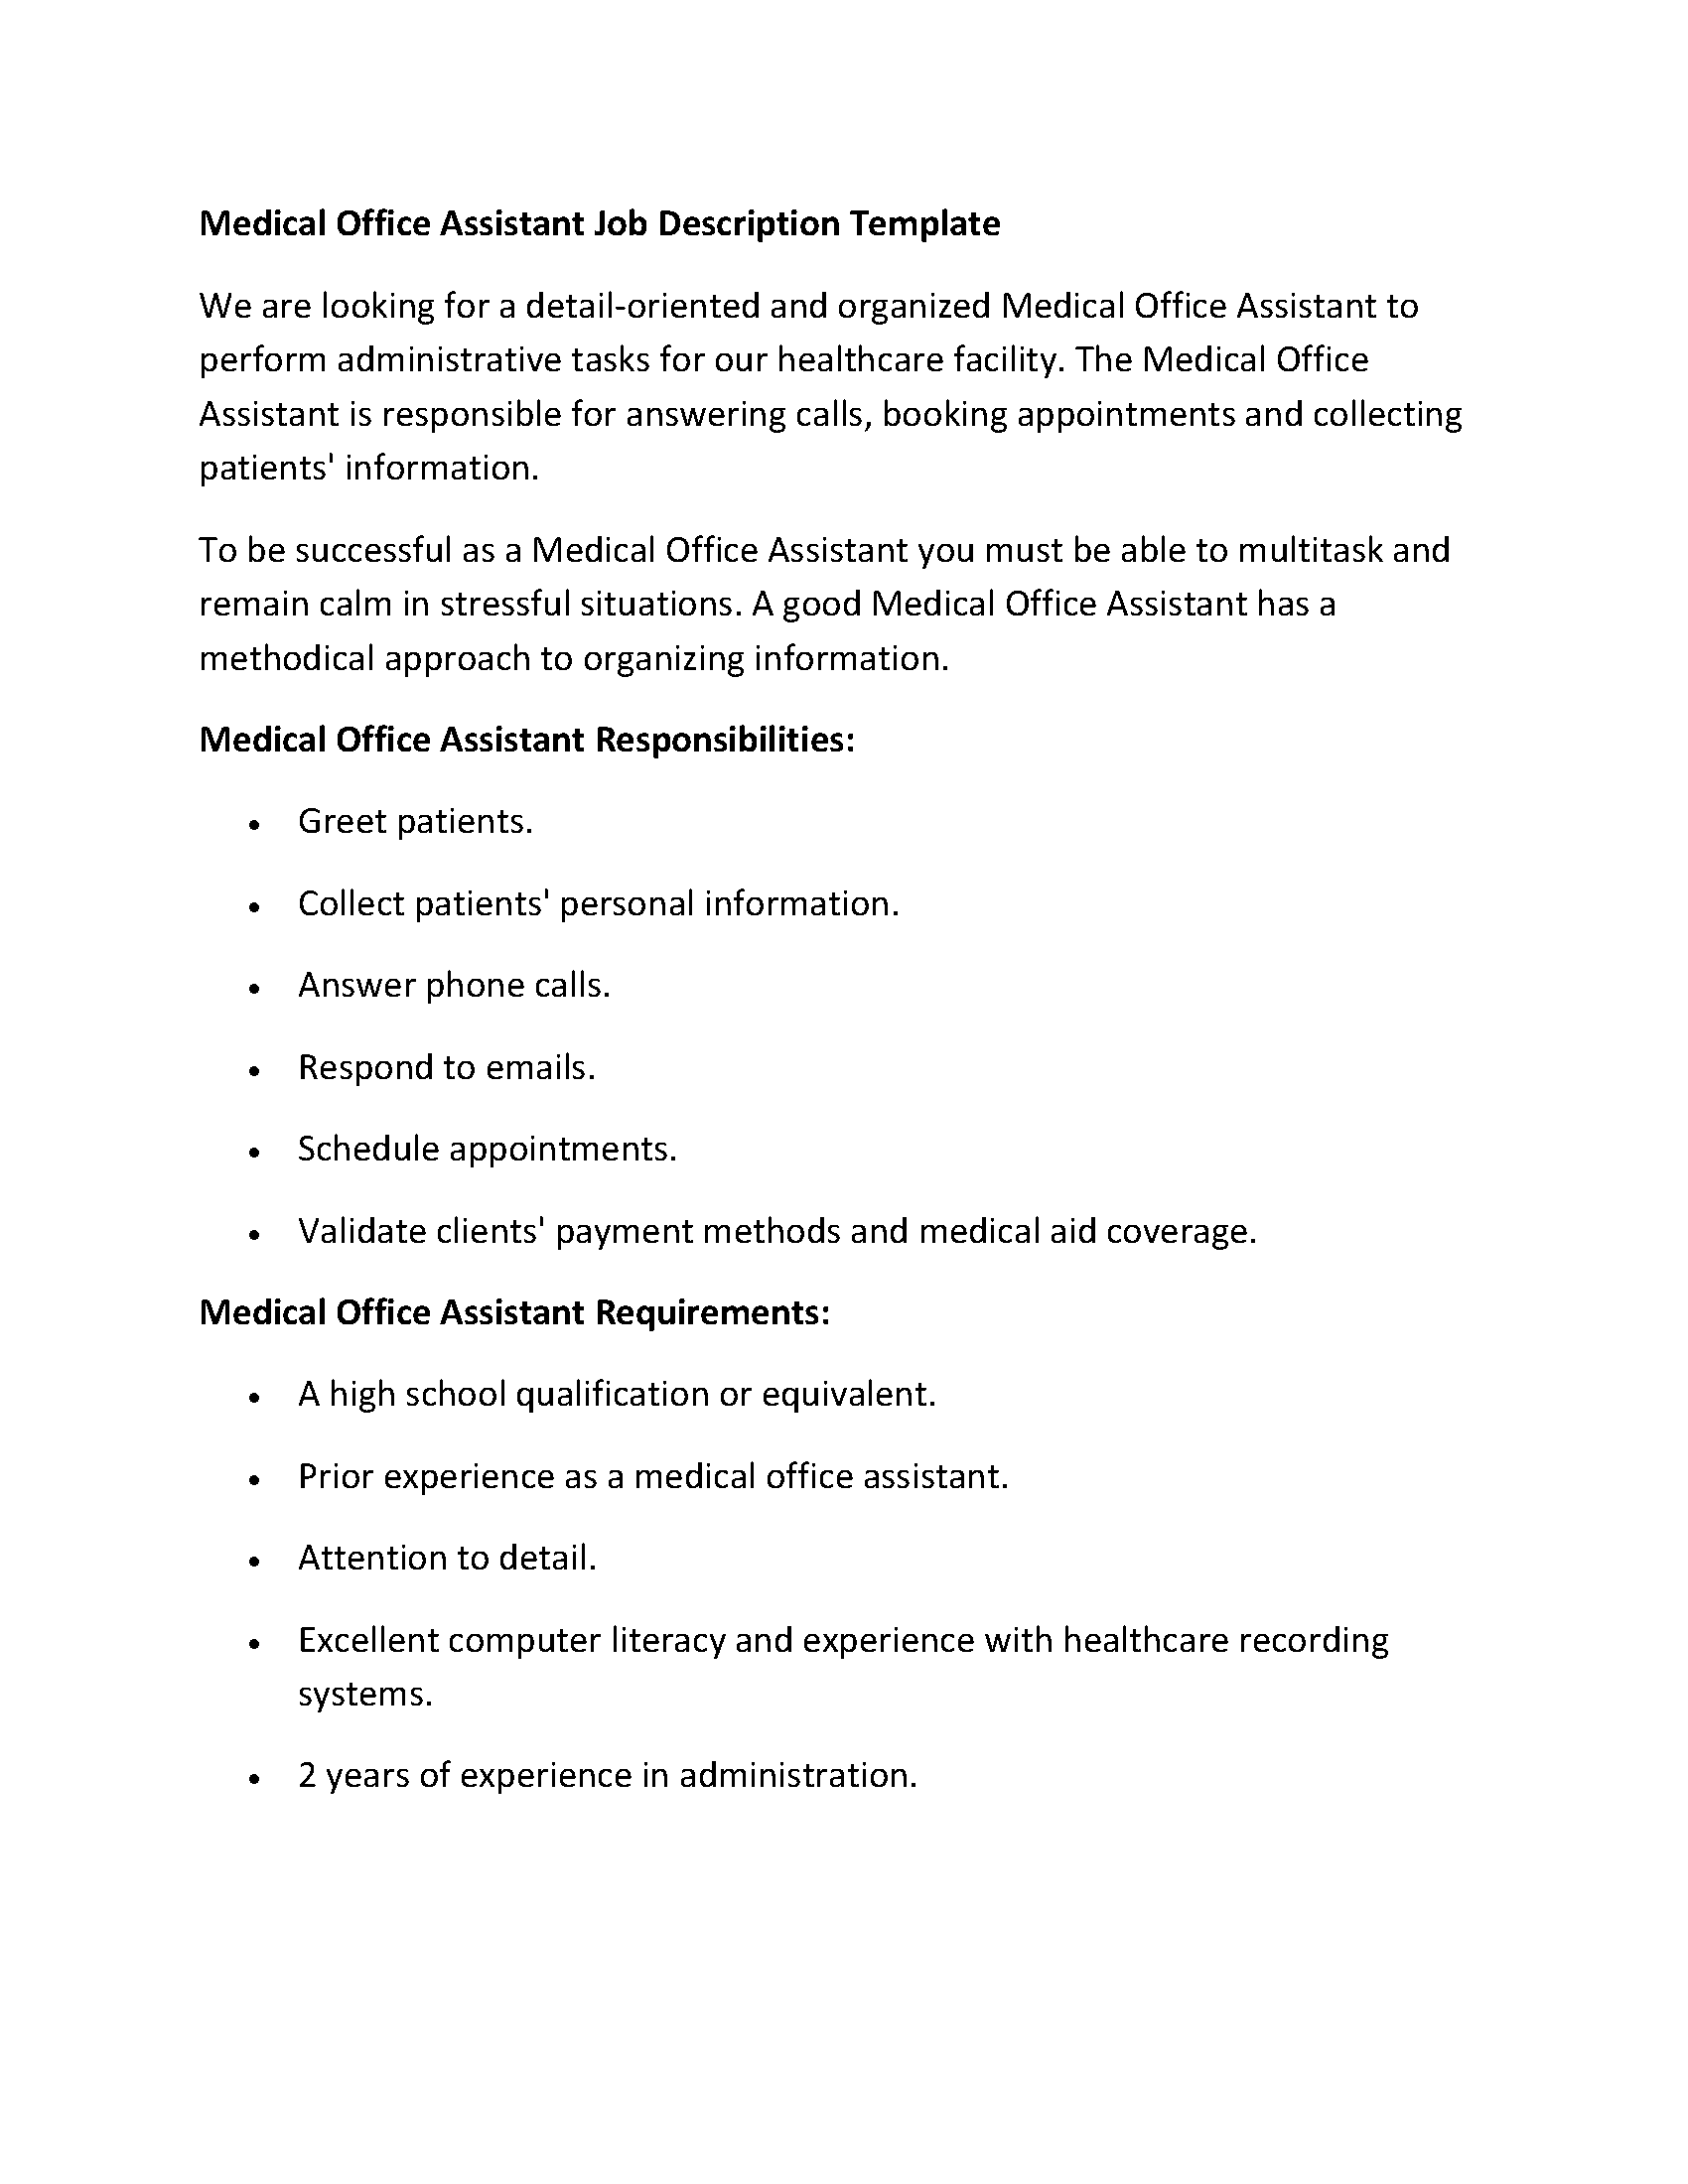 Medical Office Assistant Job Description Template